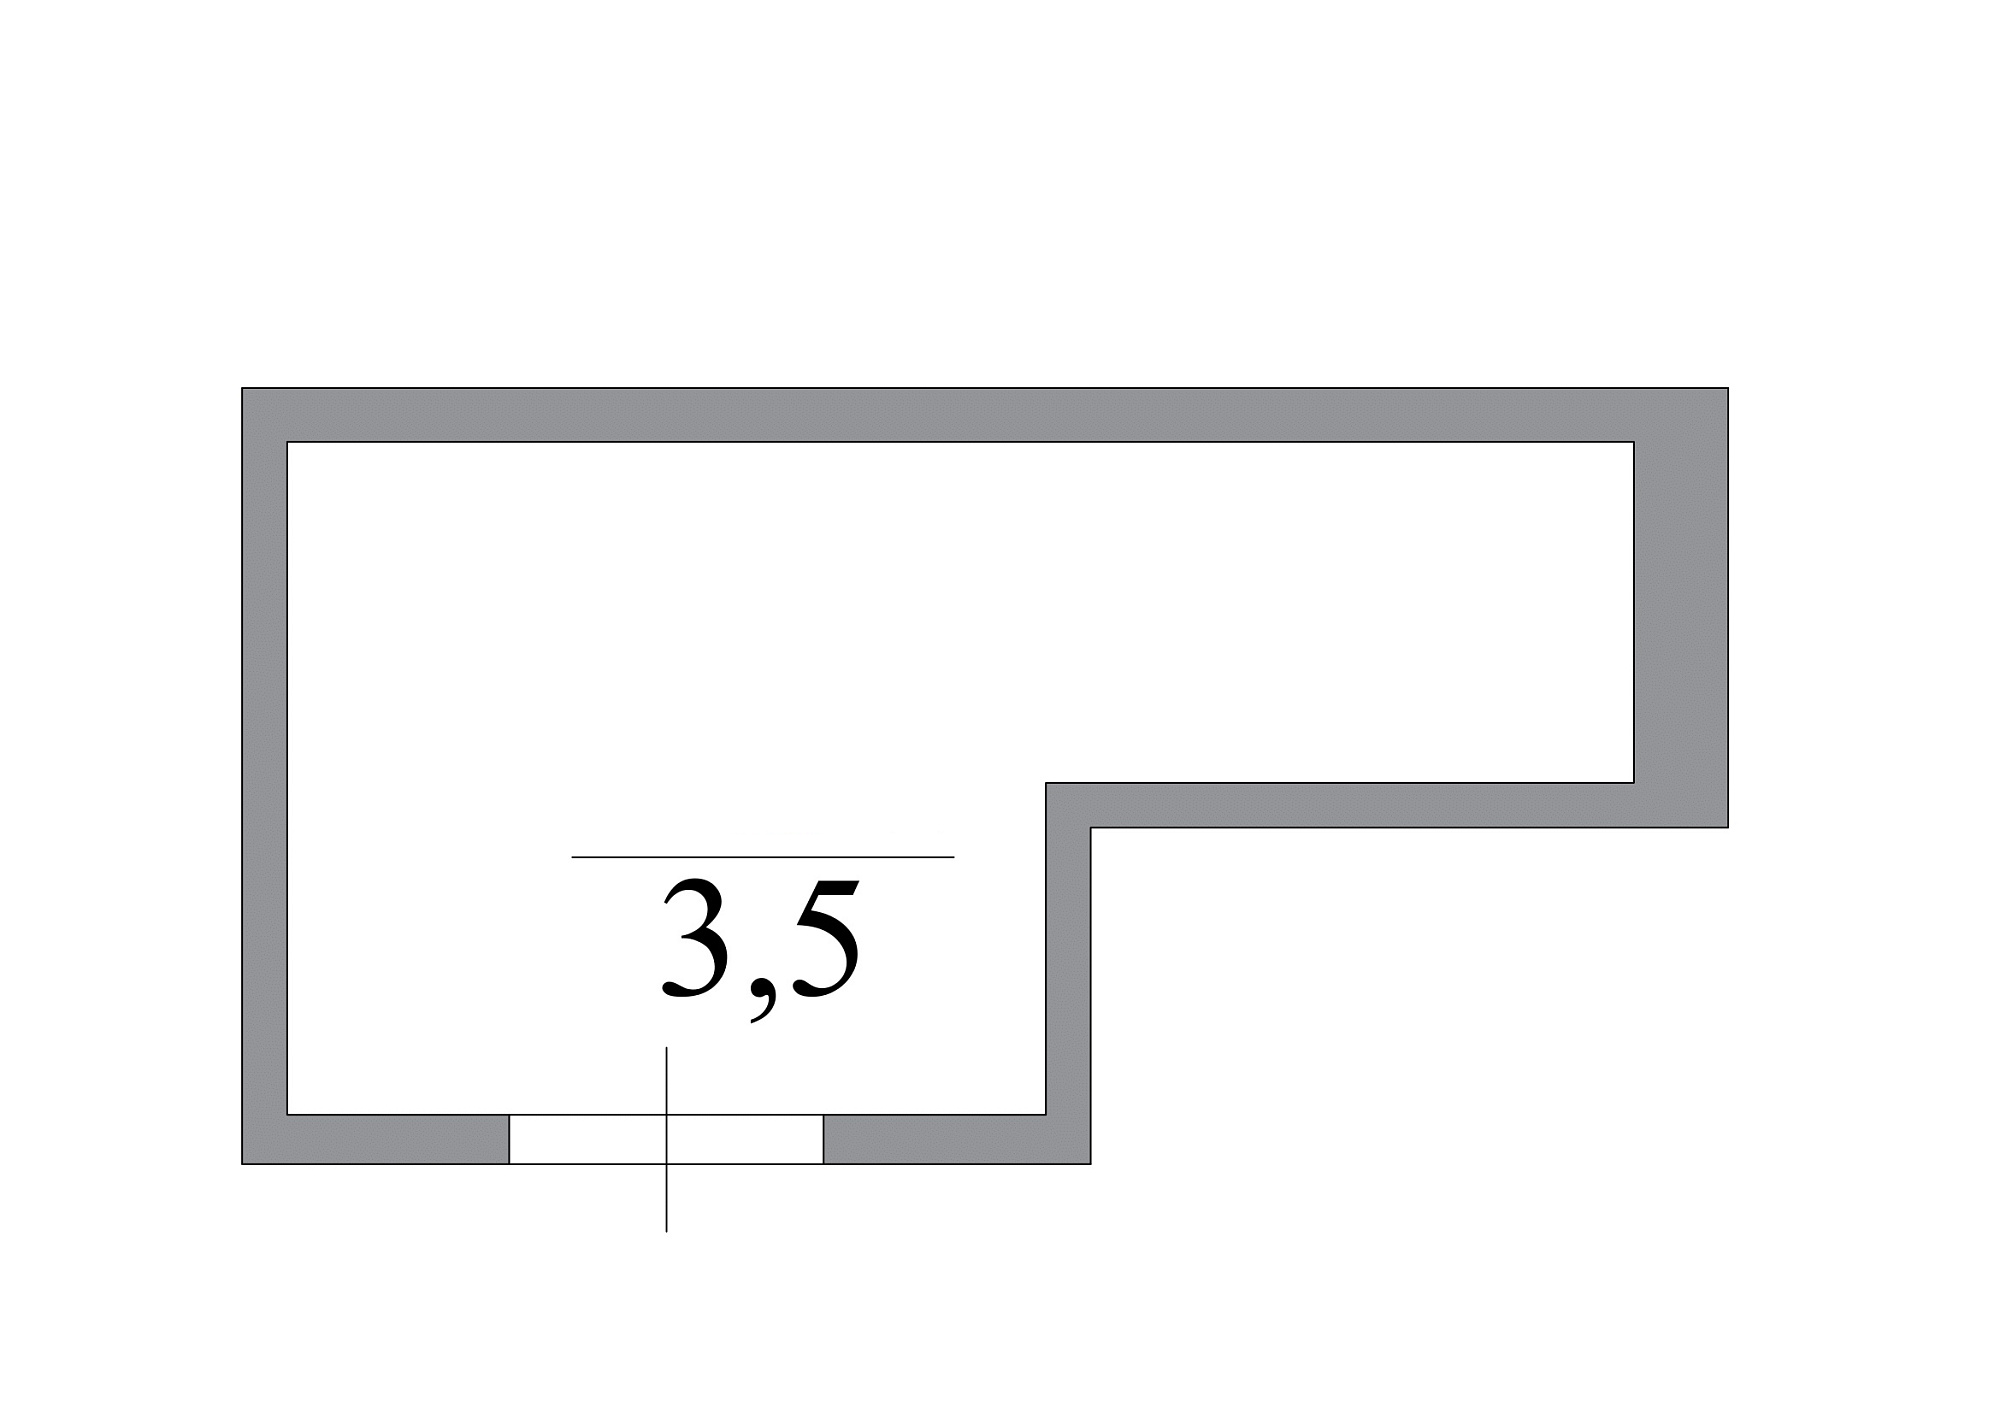 Planning Storeroom area 3.5m2, AB-07-м1/К0029.